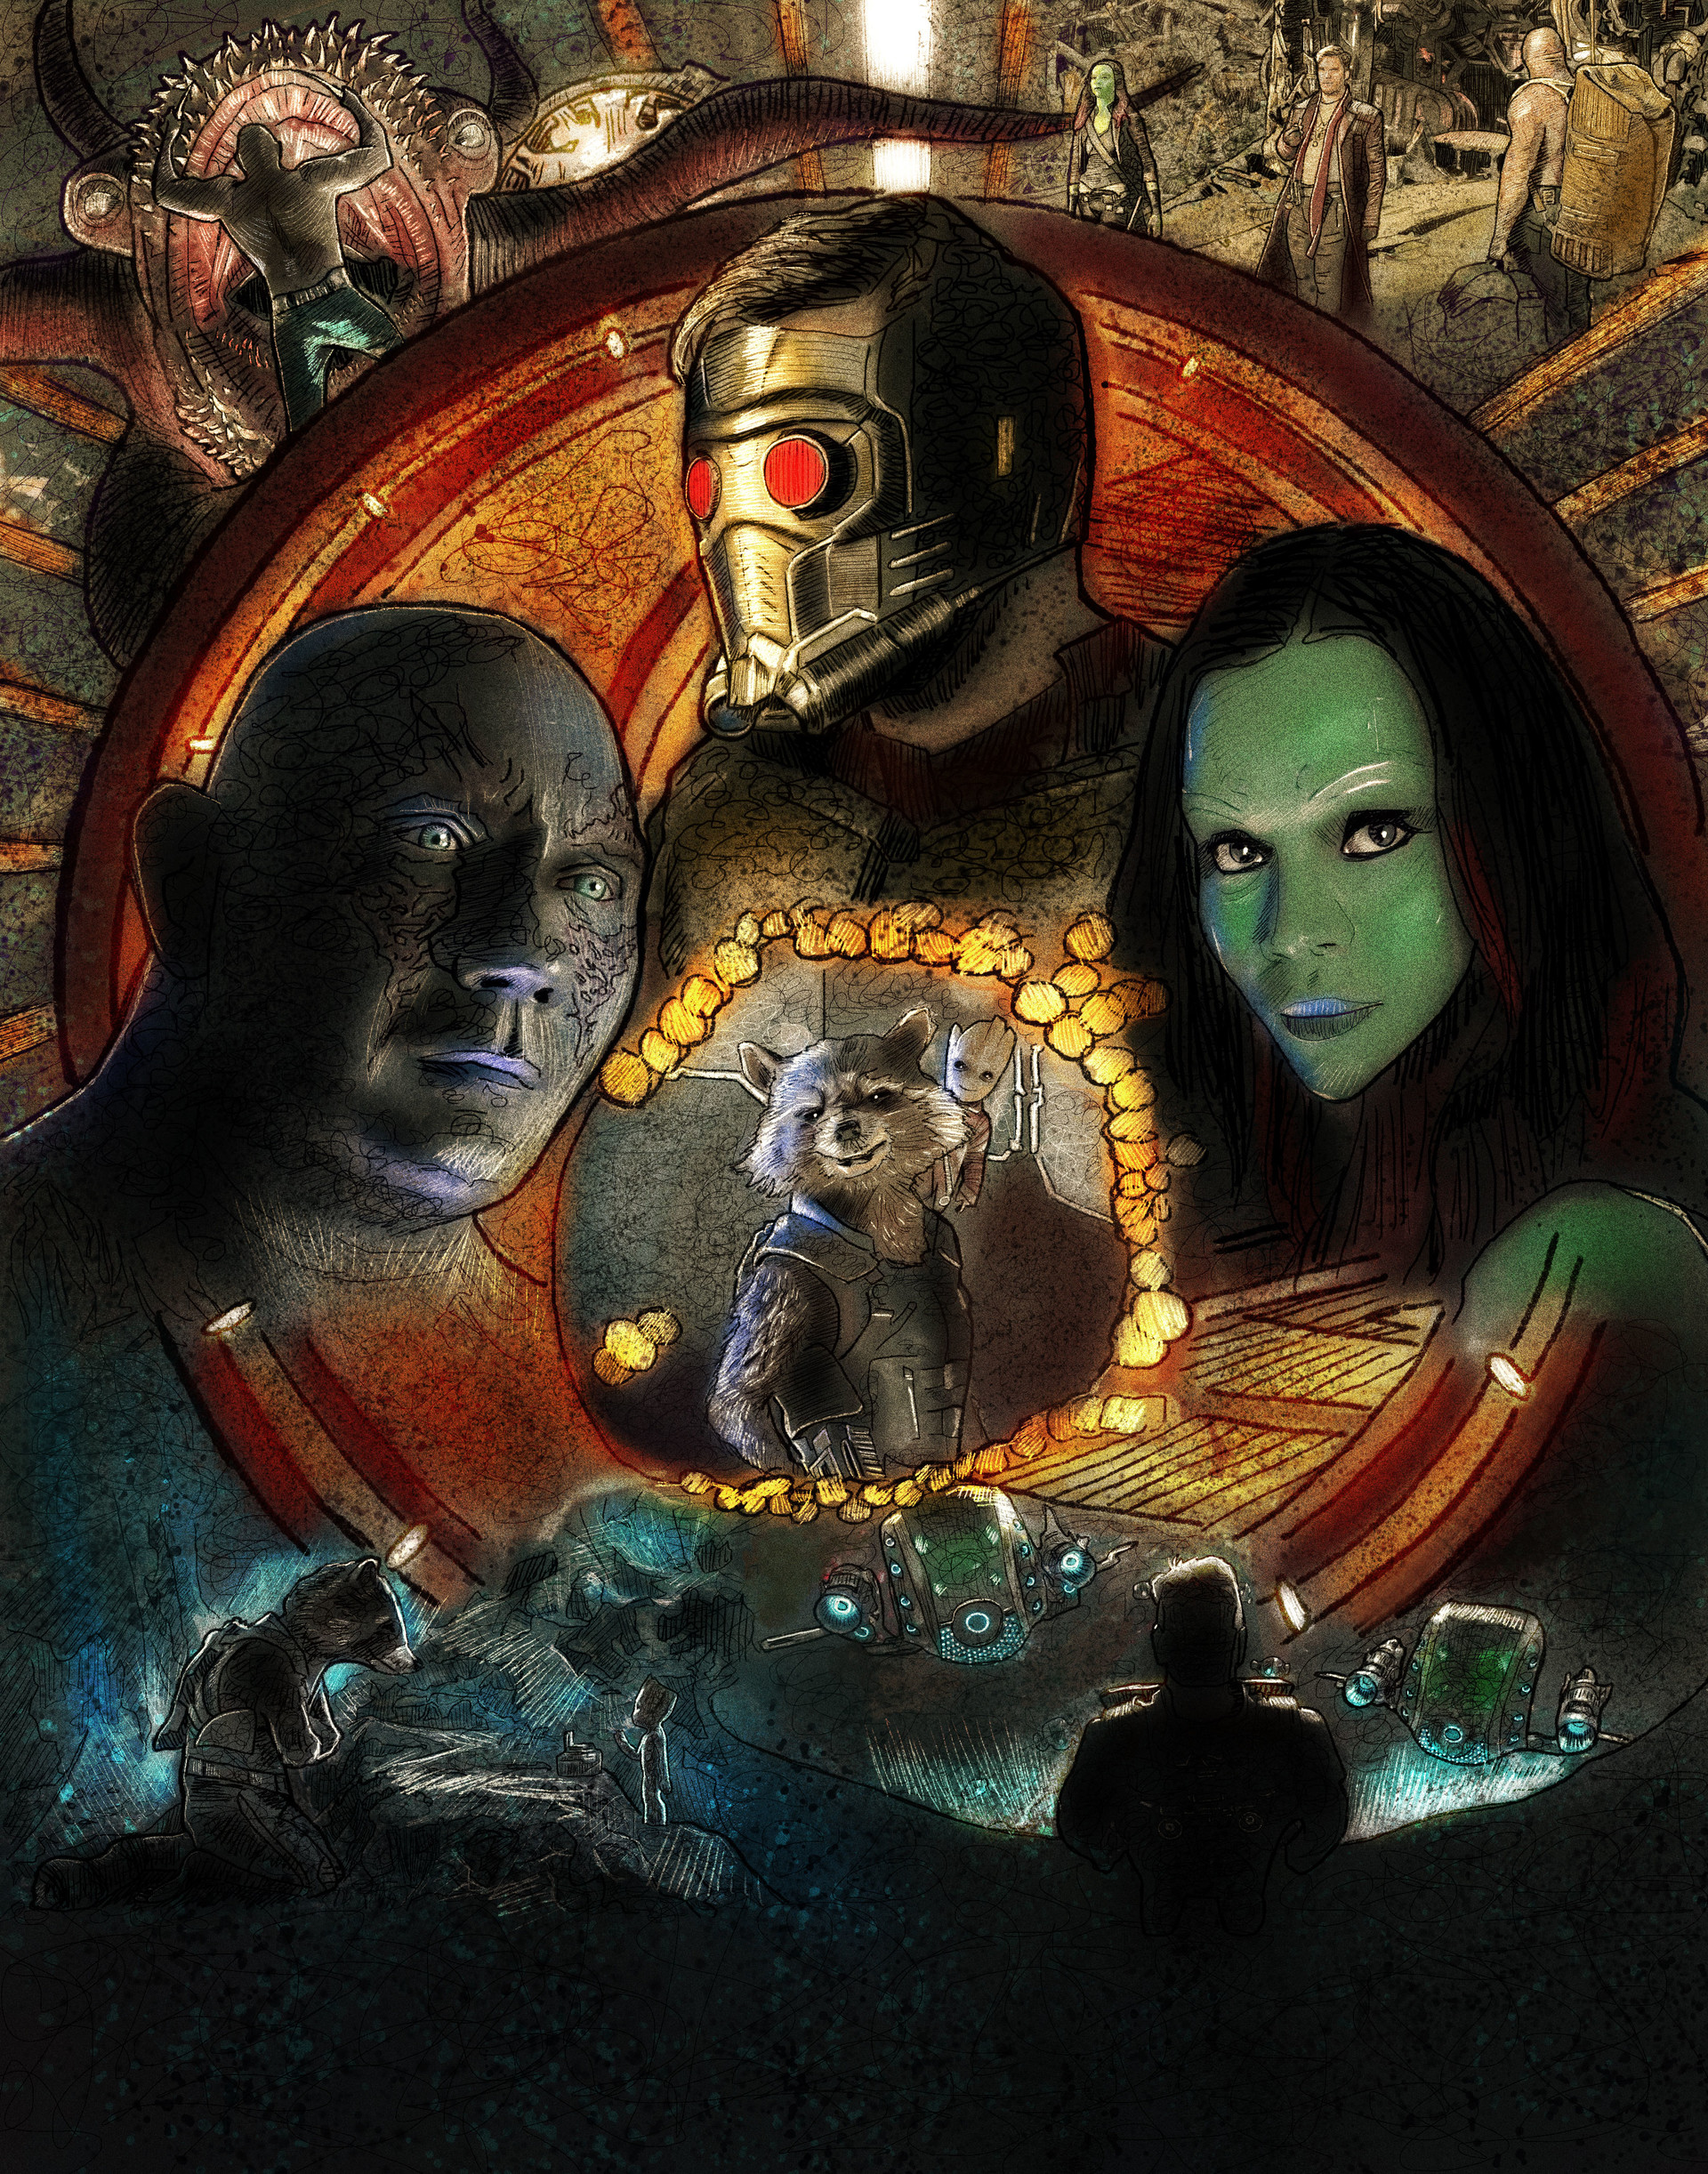 Guardians of the Galaxy Vol. 2 Art